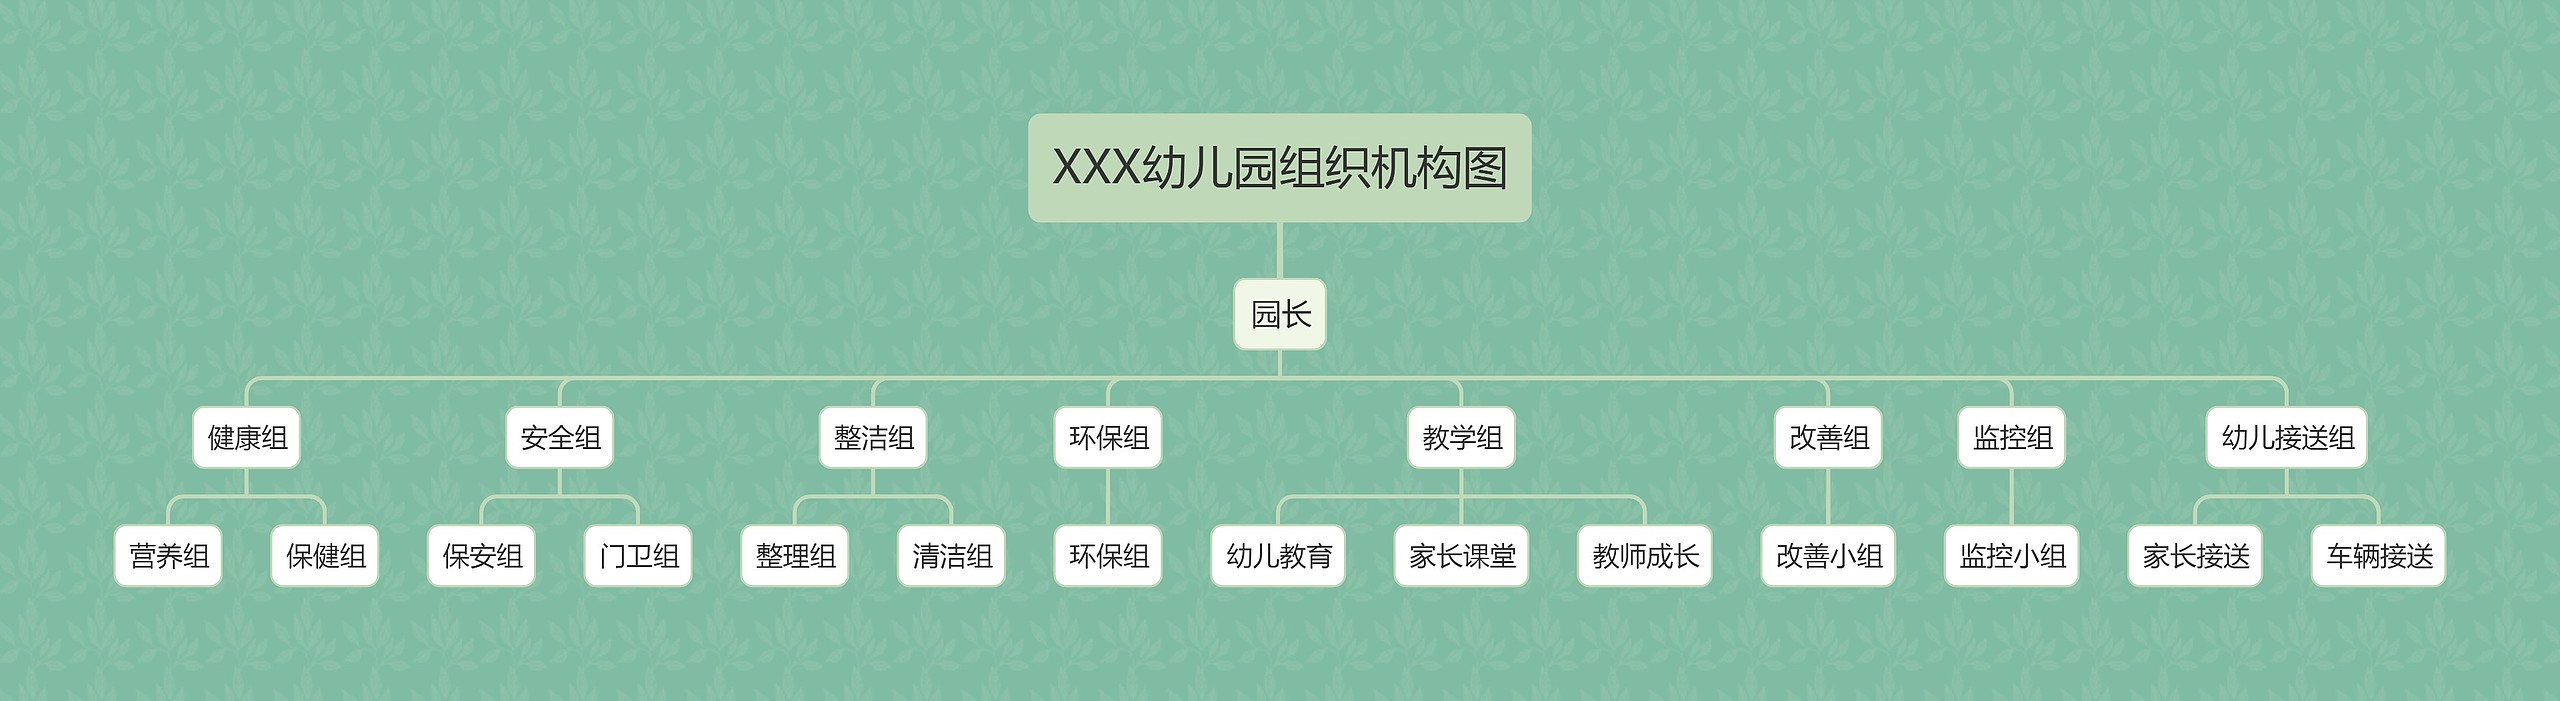 XXX幼儿园组织机构图